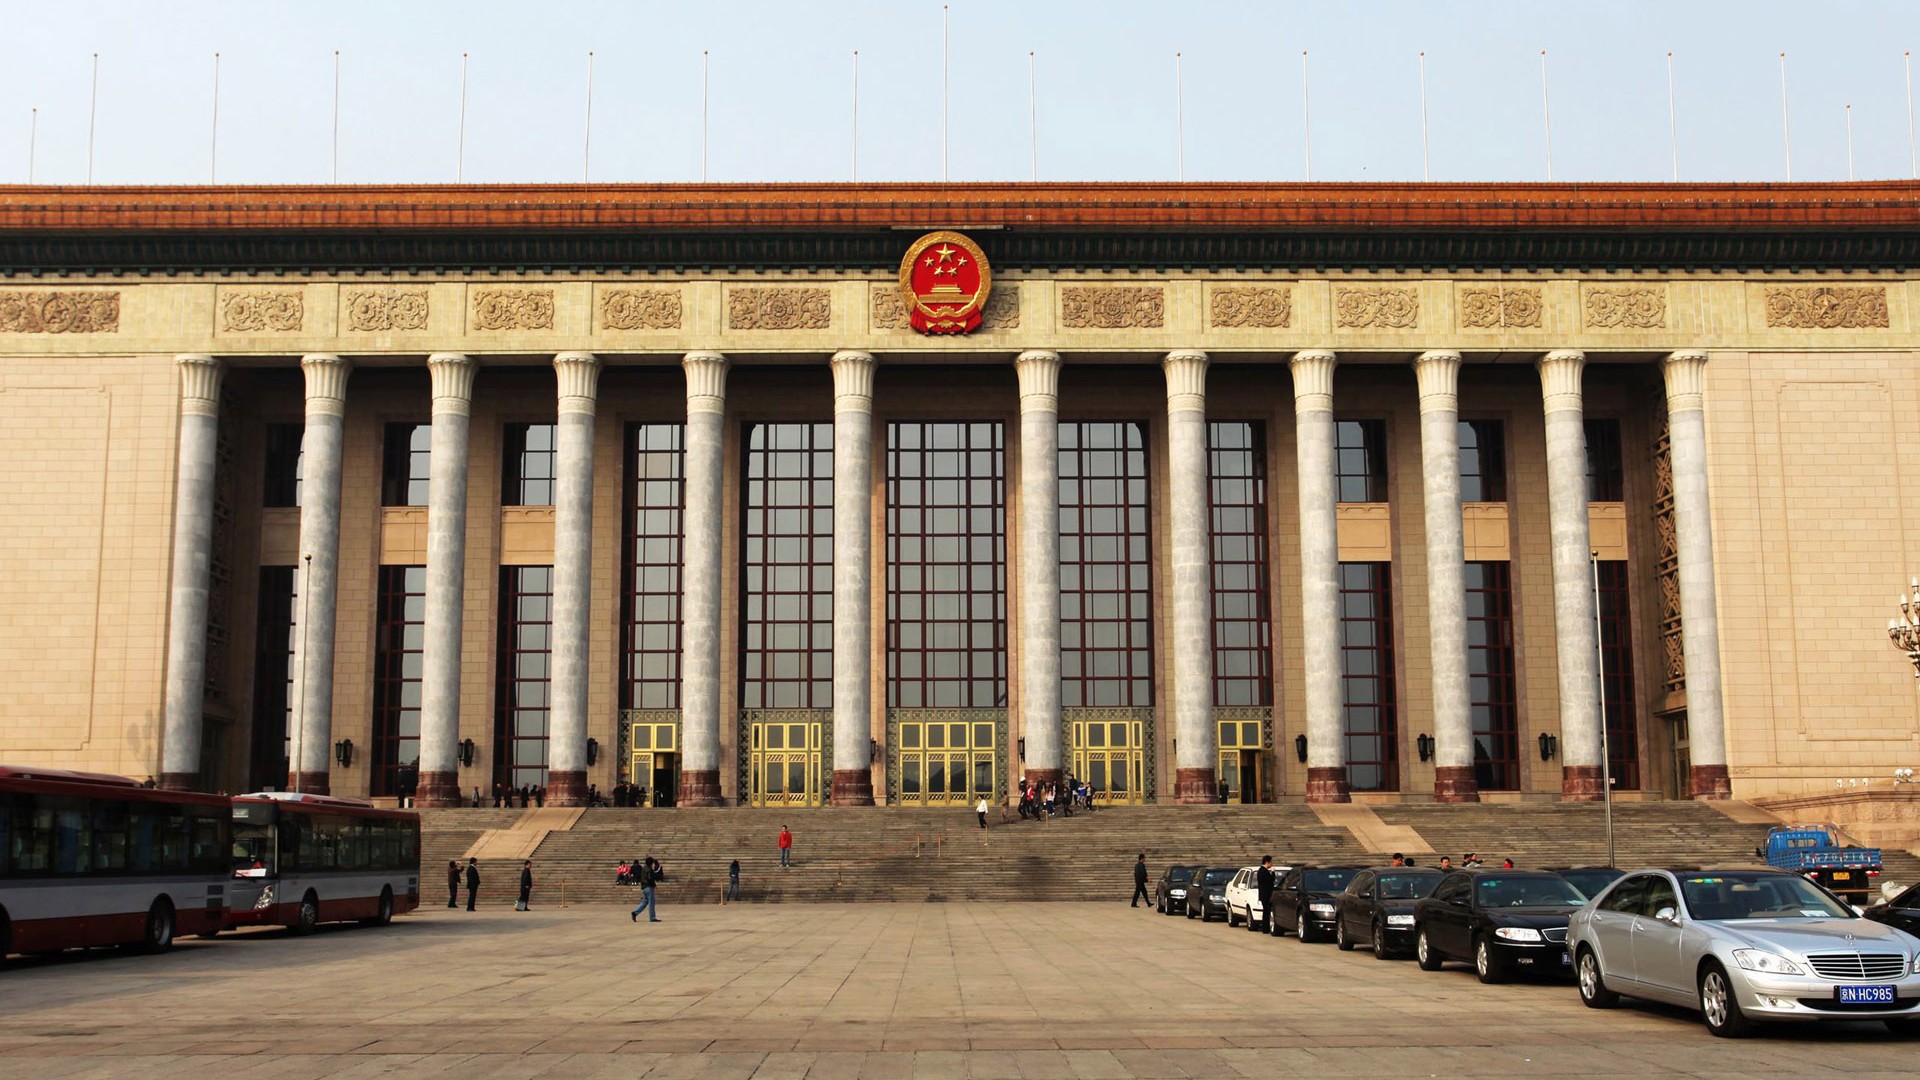 Beijing Tour - Great Hall (ggc works) #1 - 1920x1080